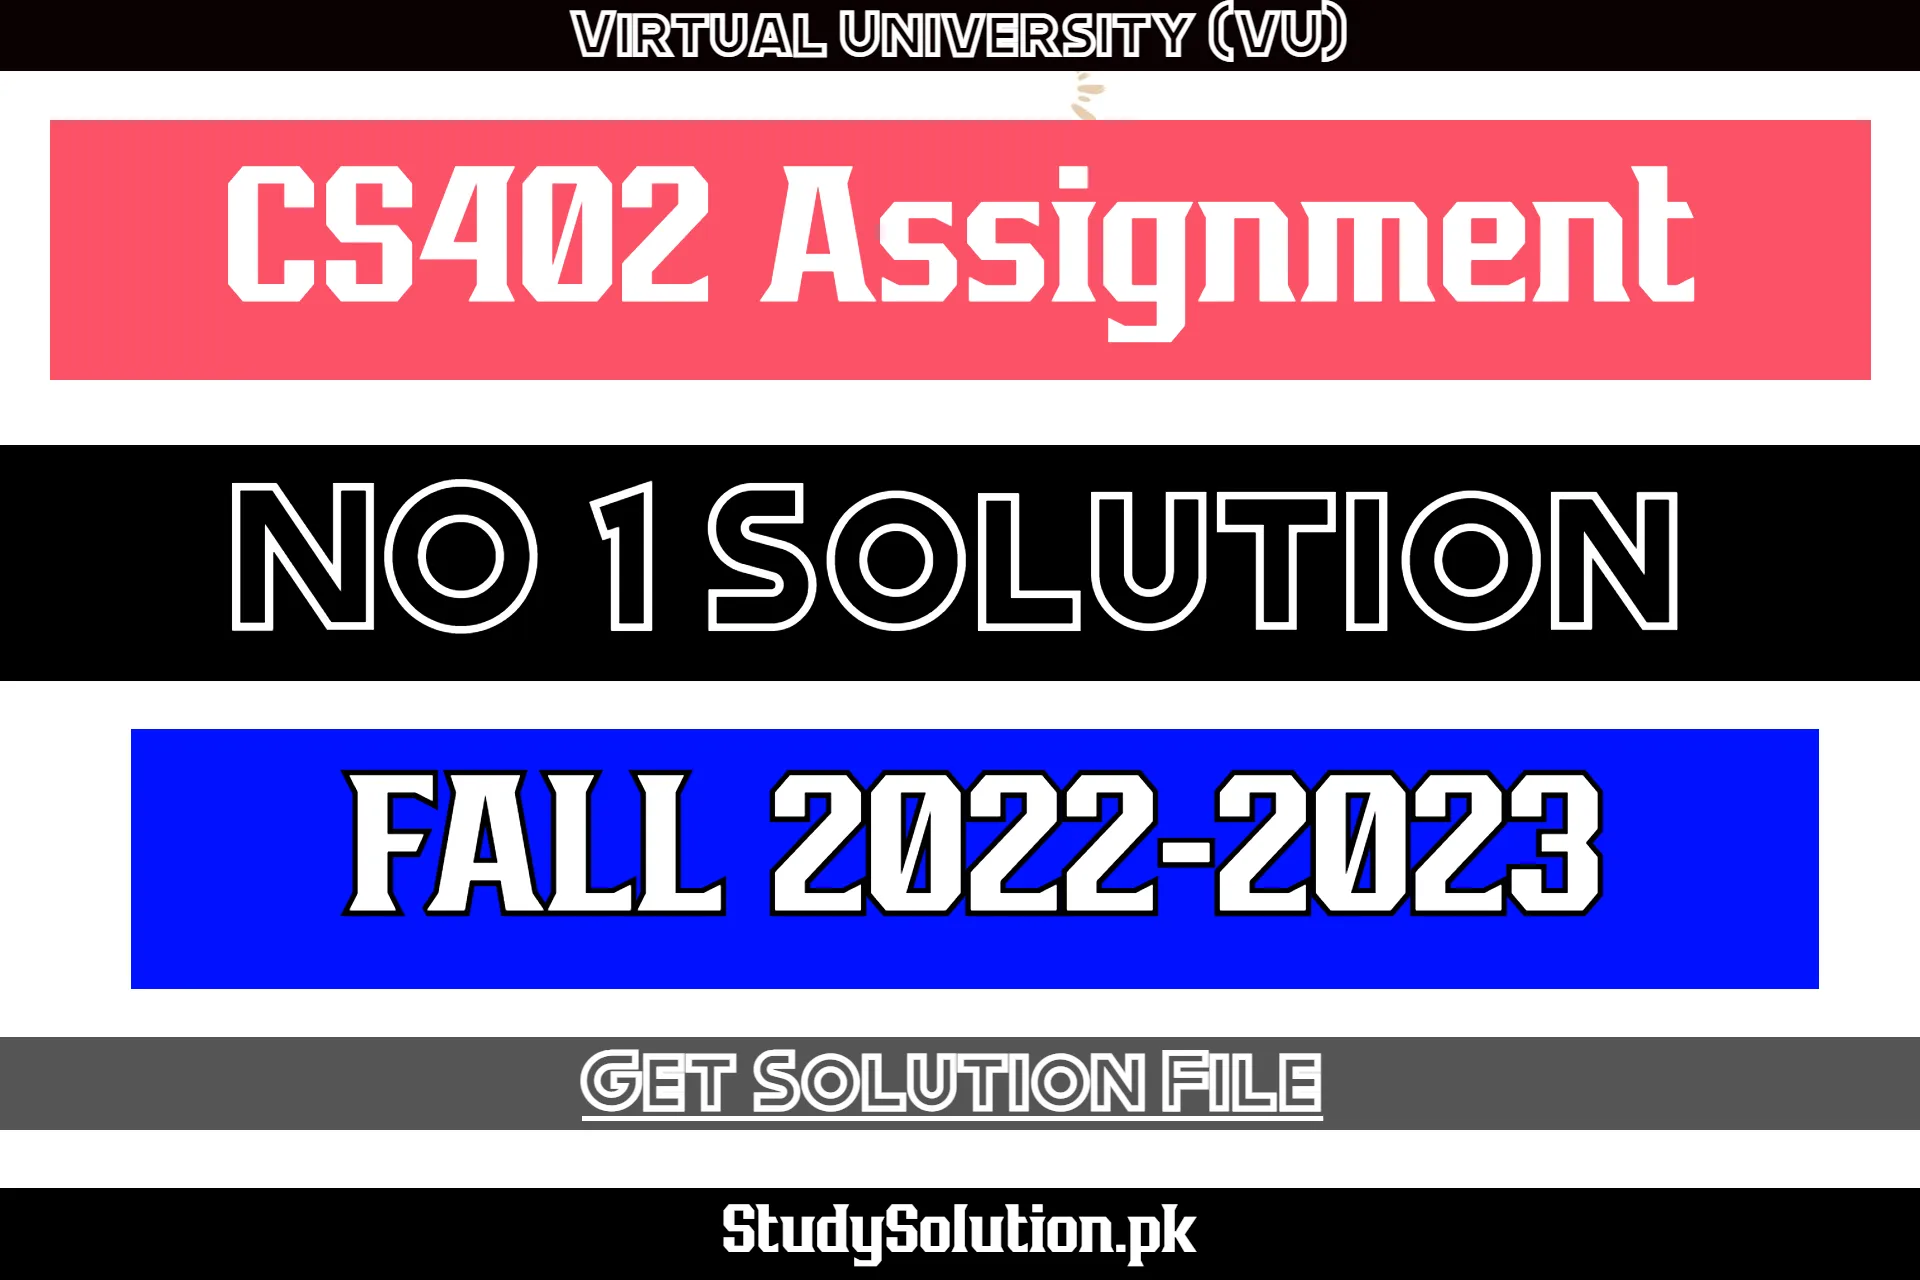 CS402 Assignment No 1 Solution Fall 2022